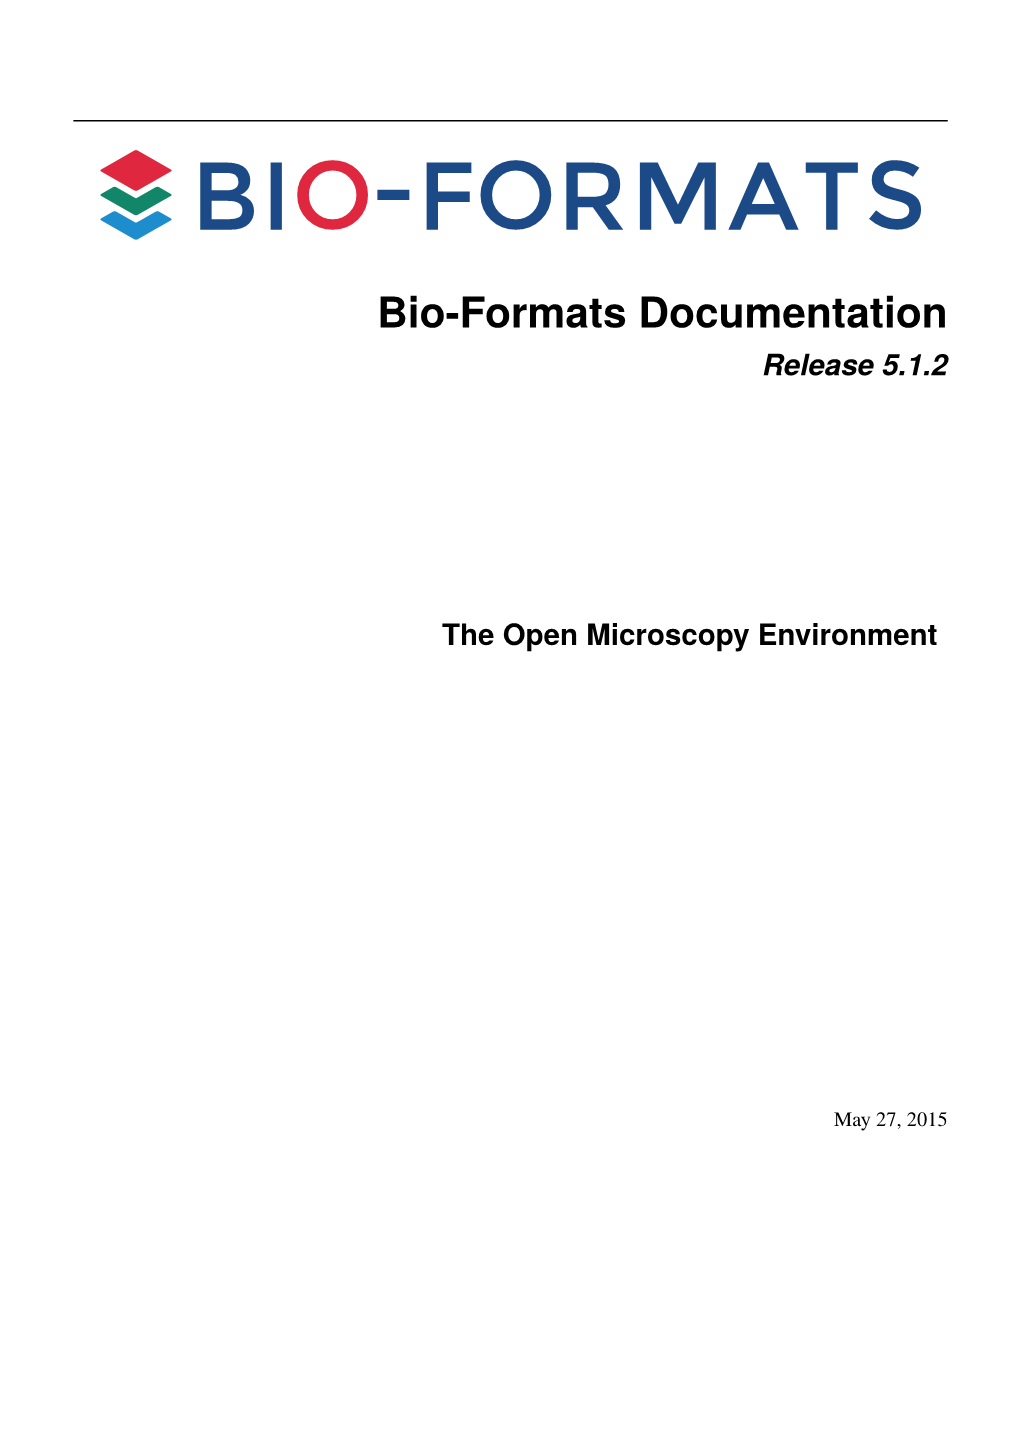 Bio-Formats Documentation Release 5.1.2